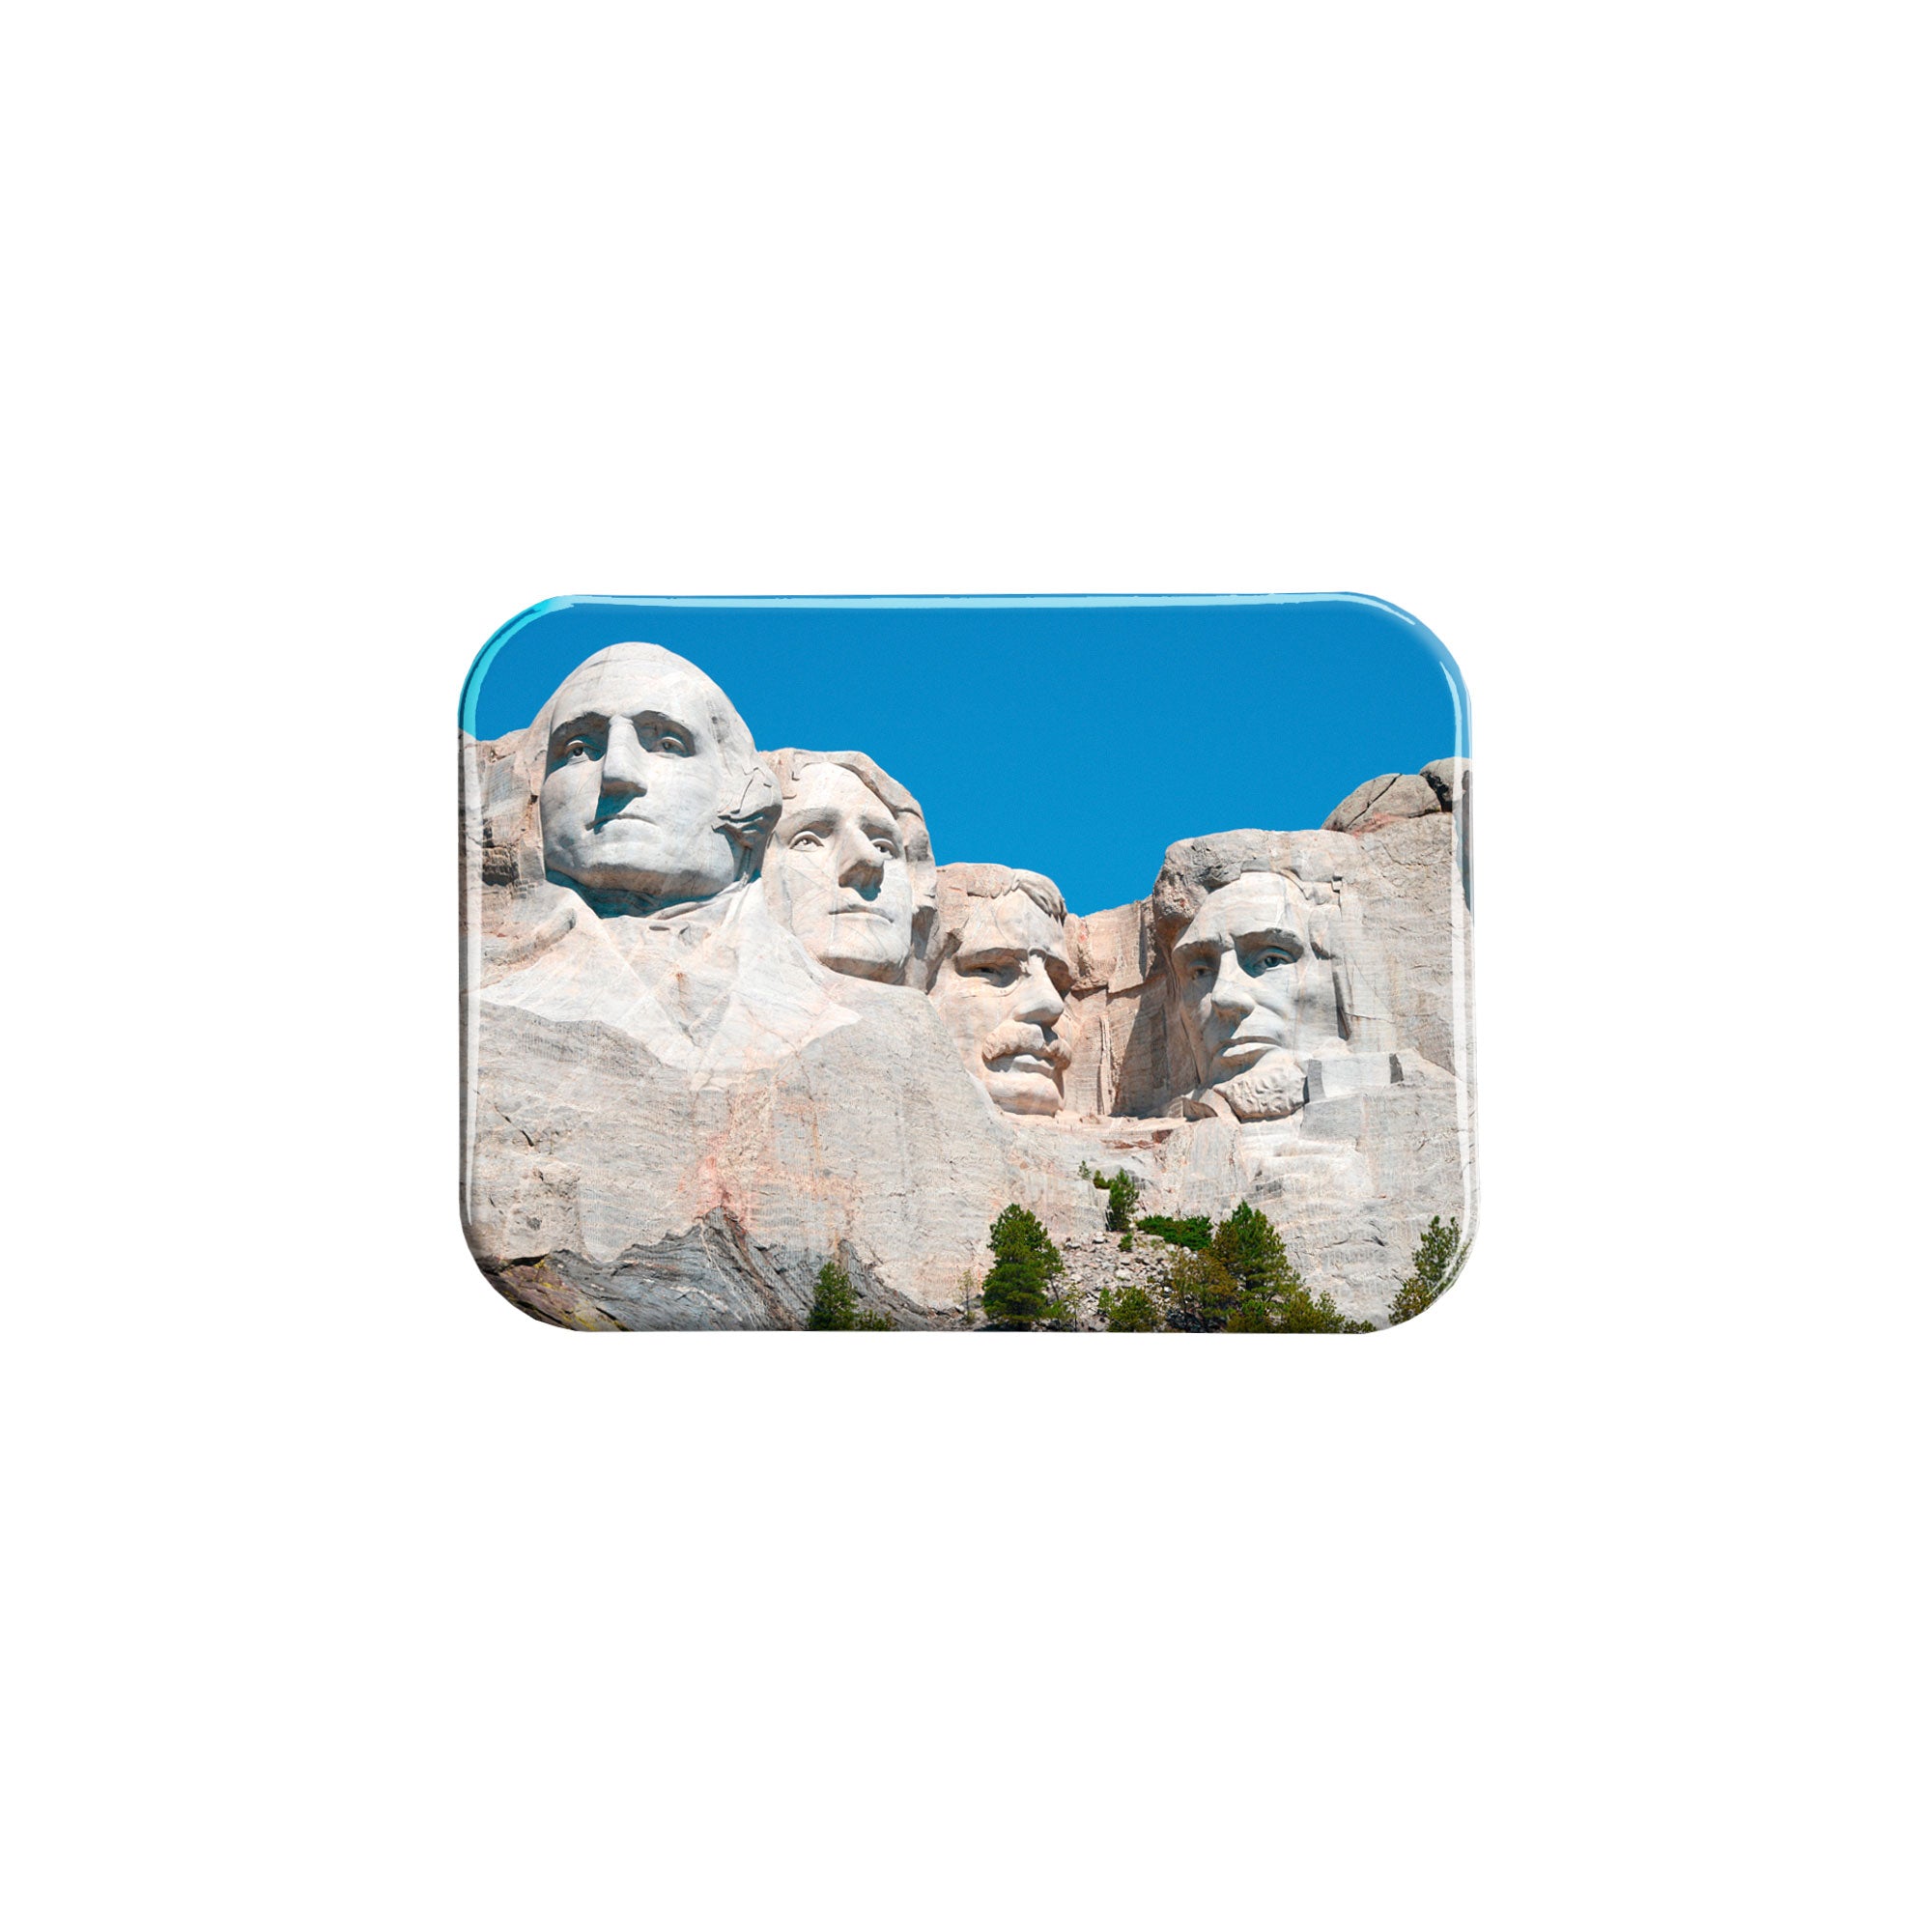 "Mount Rushmore" - 2.5" X 3.5" Rectangle Fridge Magnets